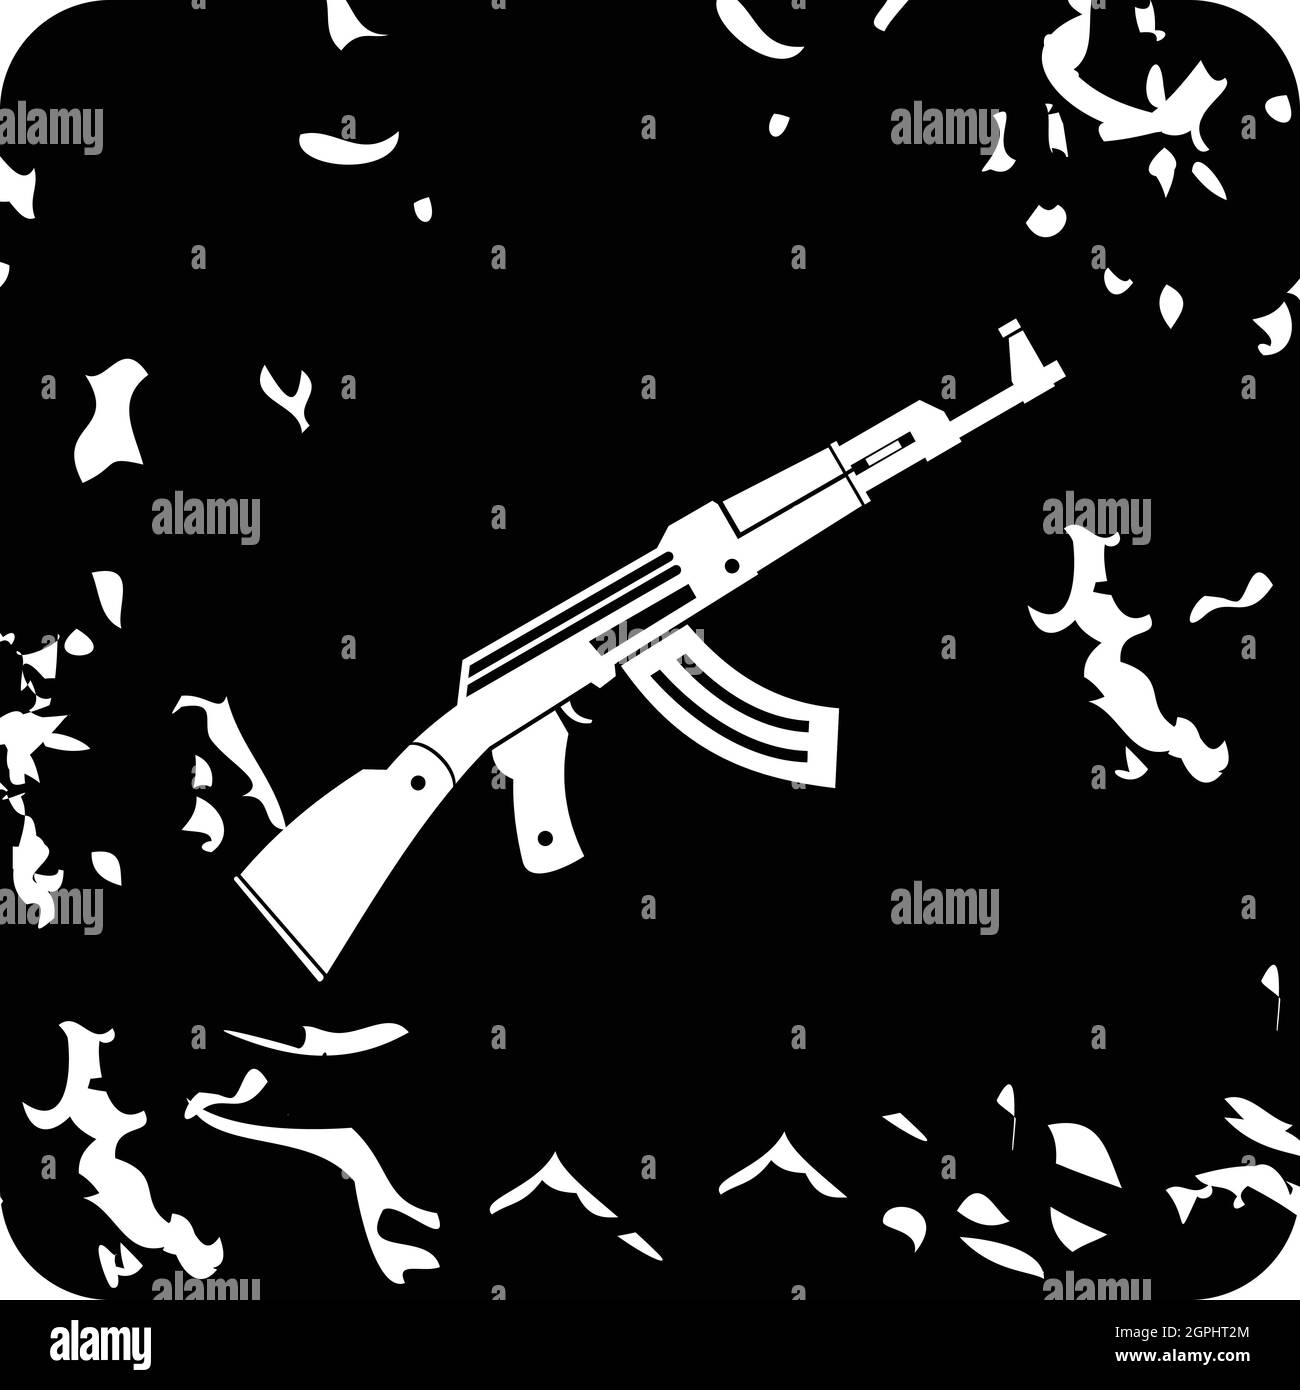 Automatic Kalashnikov icon, grunge style Stock Vector